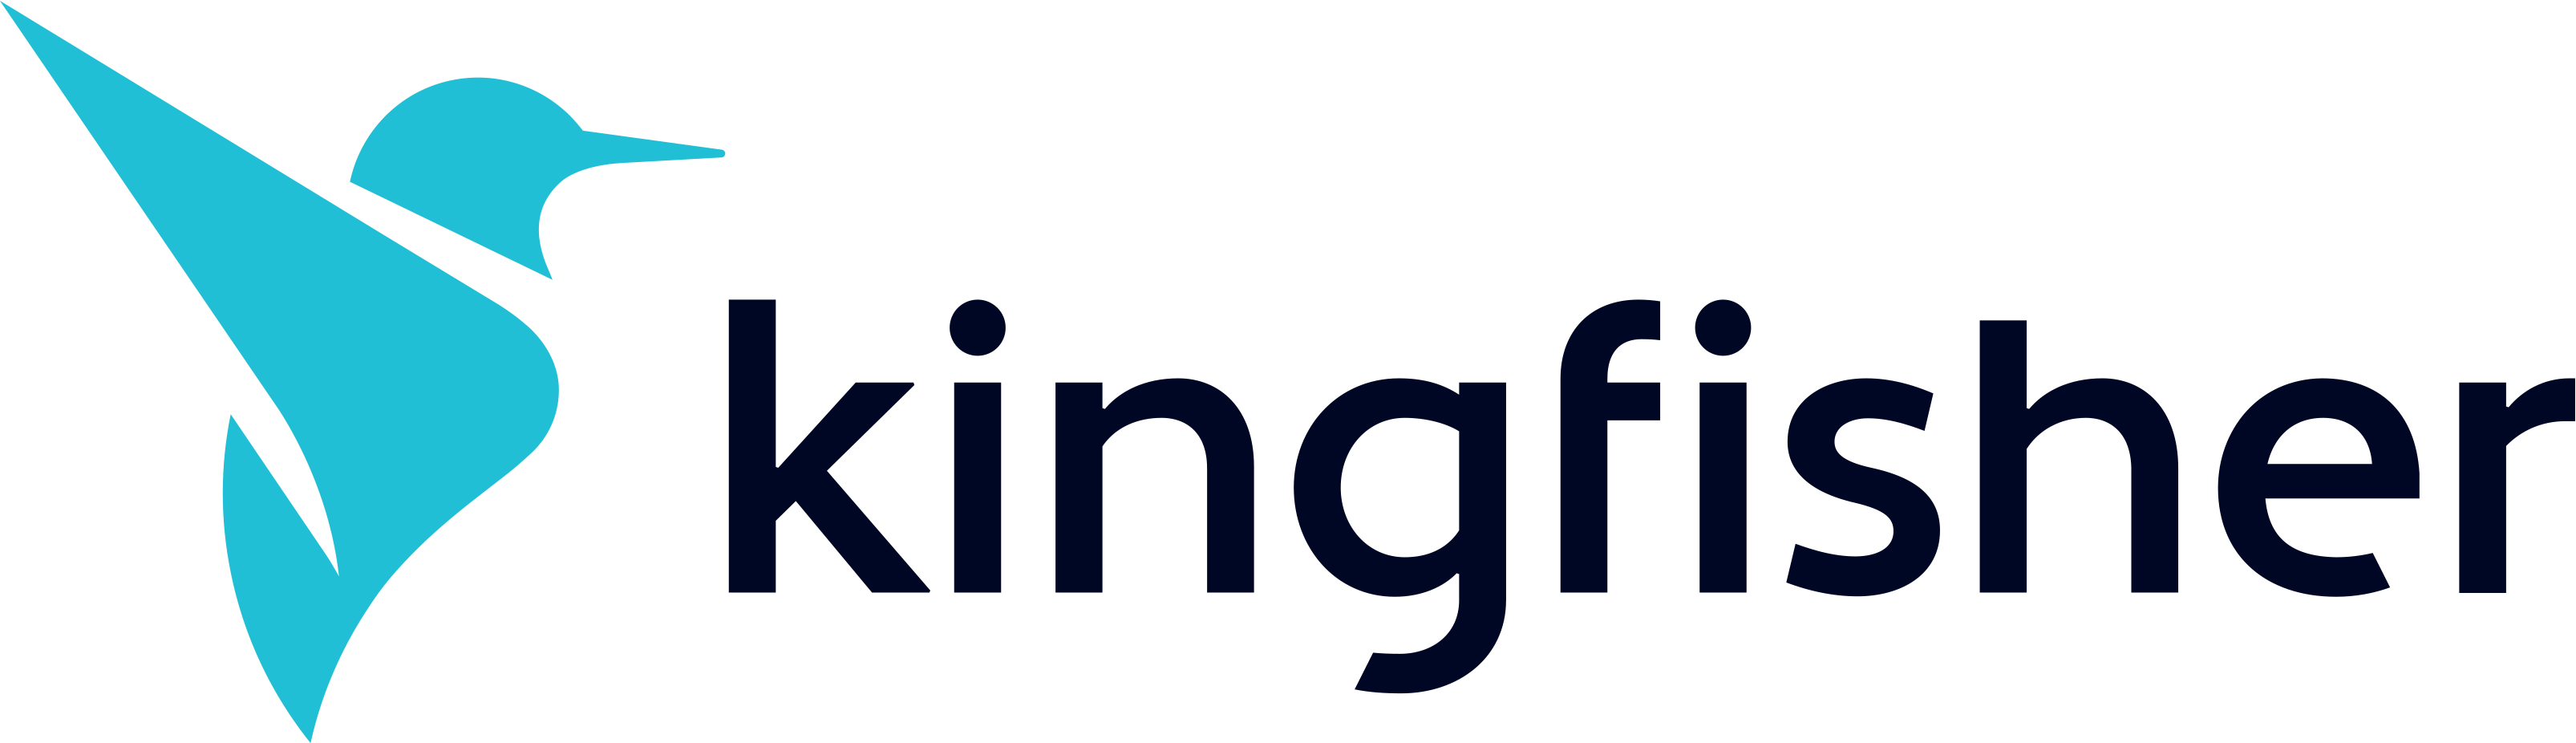 kingfisher-logo